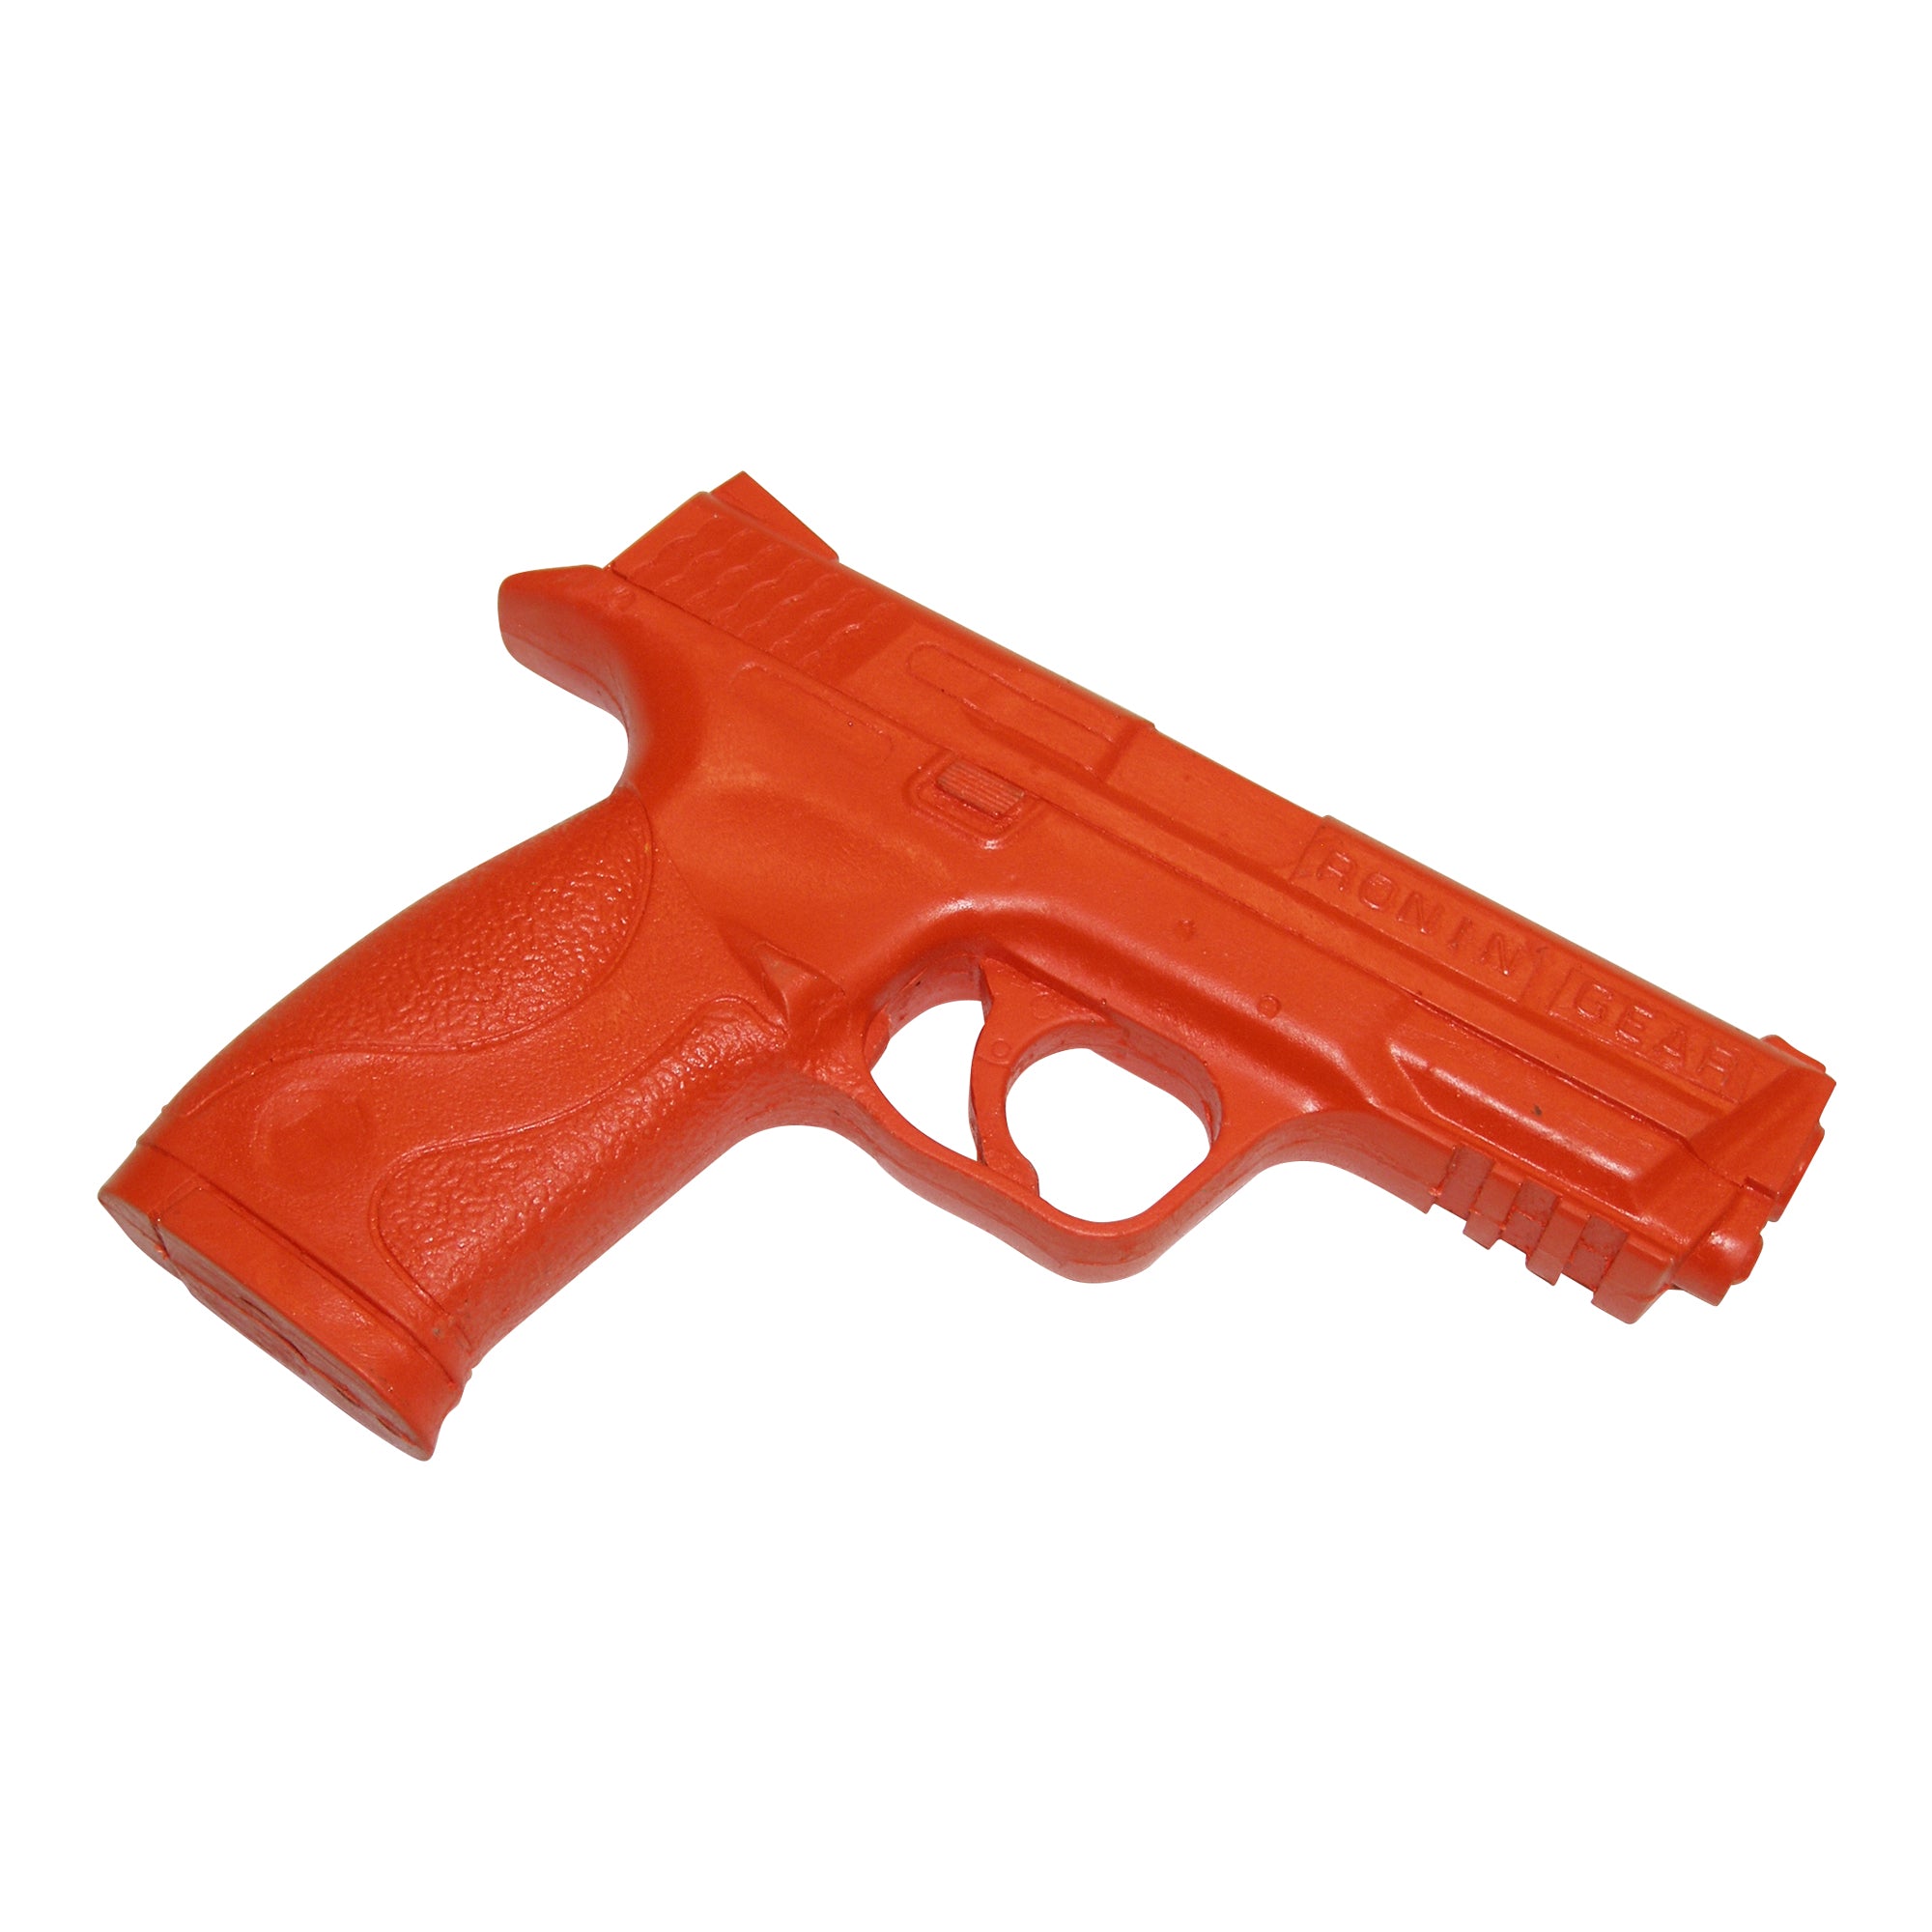 Rubber Standard M&P Training Gun Orange USA